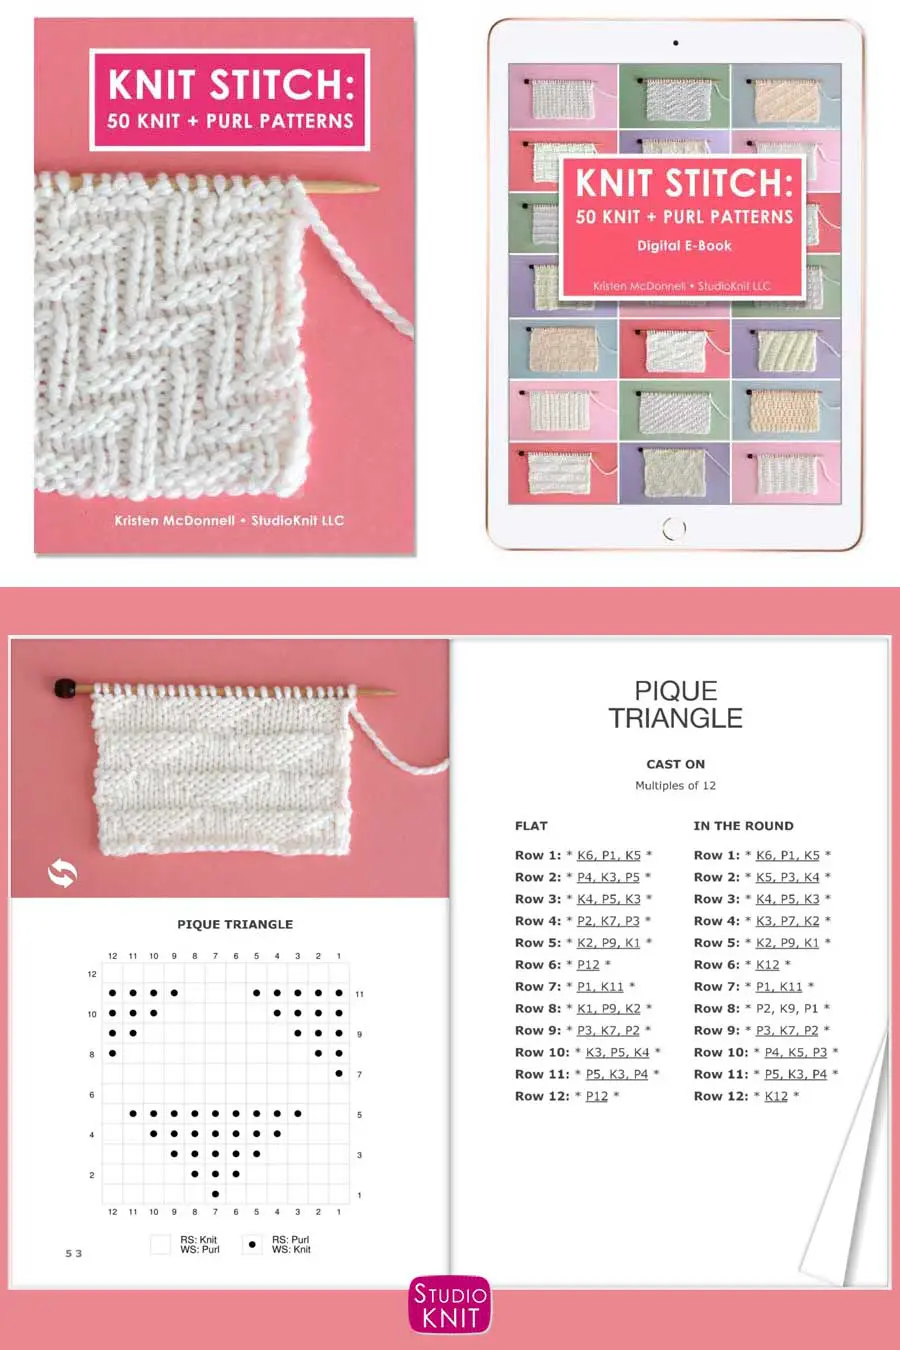 Knit Stitch Pattern Book with Pique Triangles Stitch